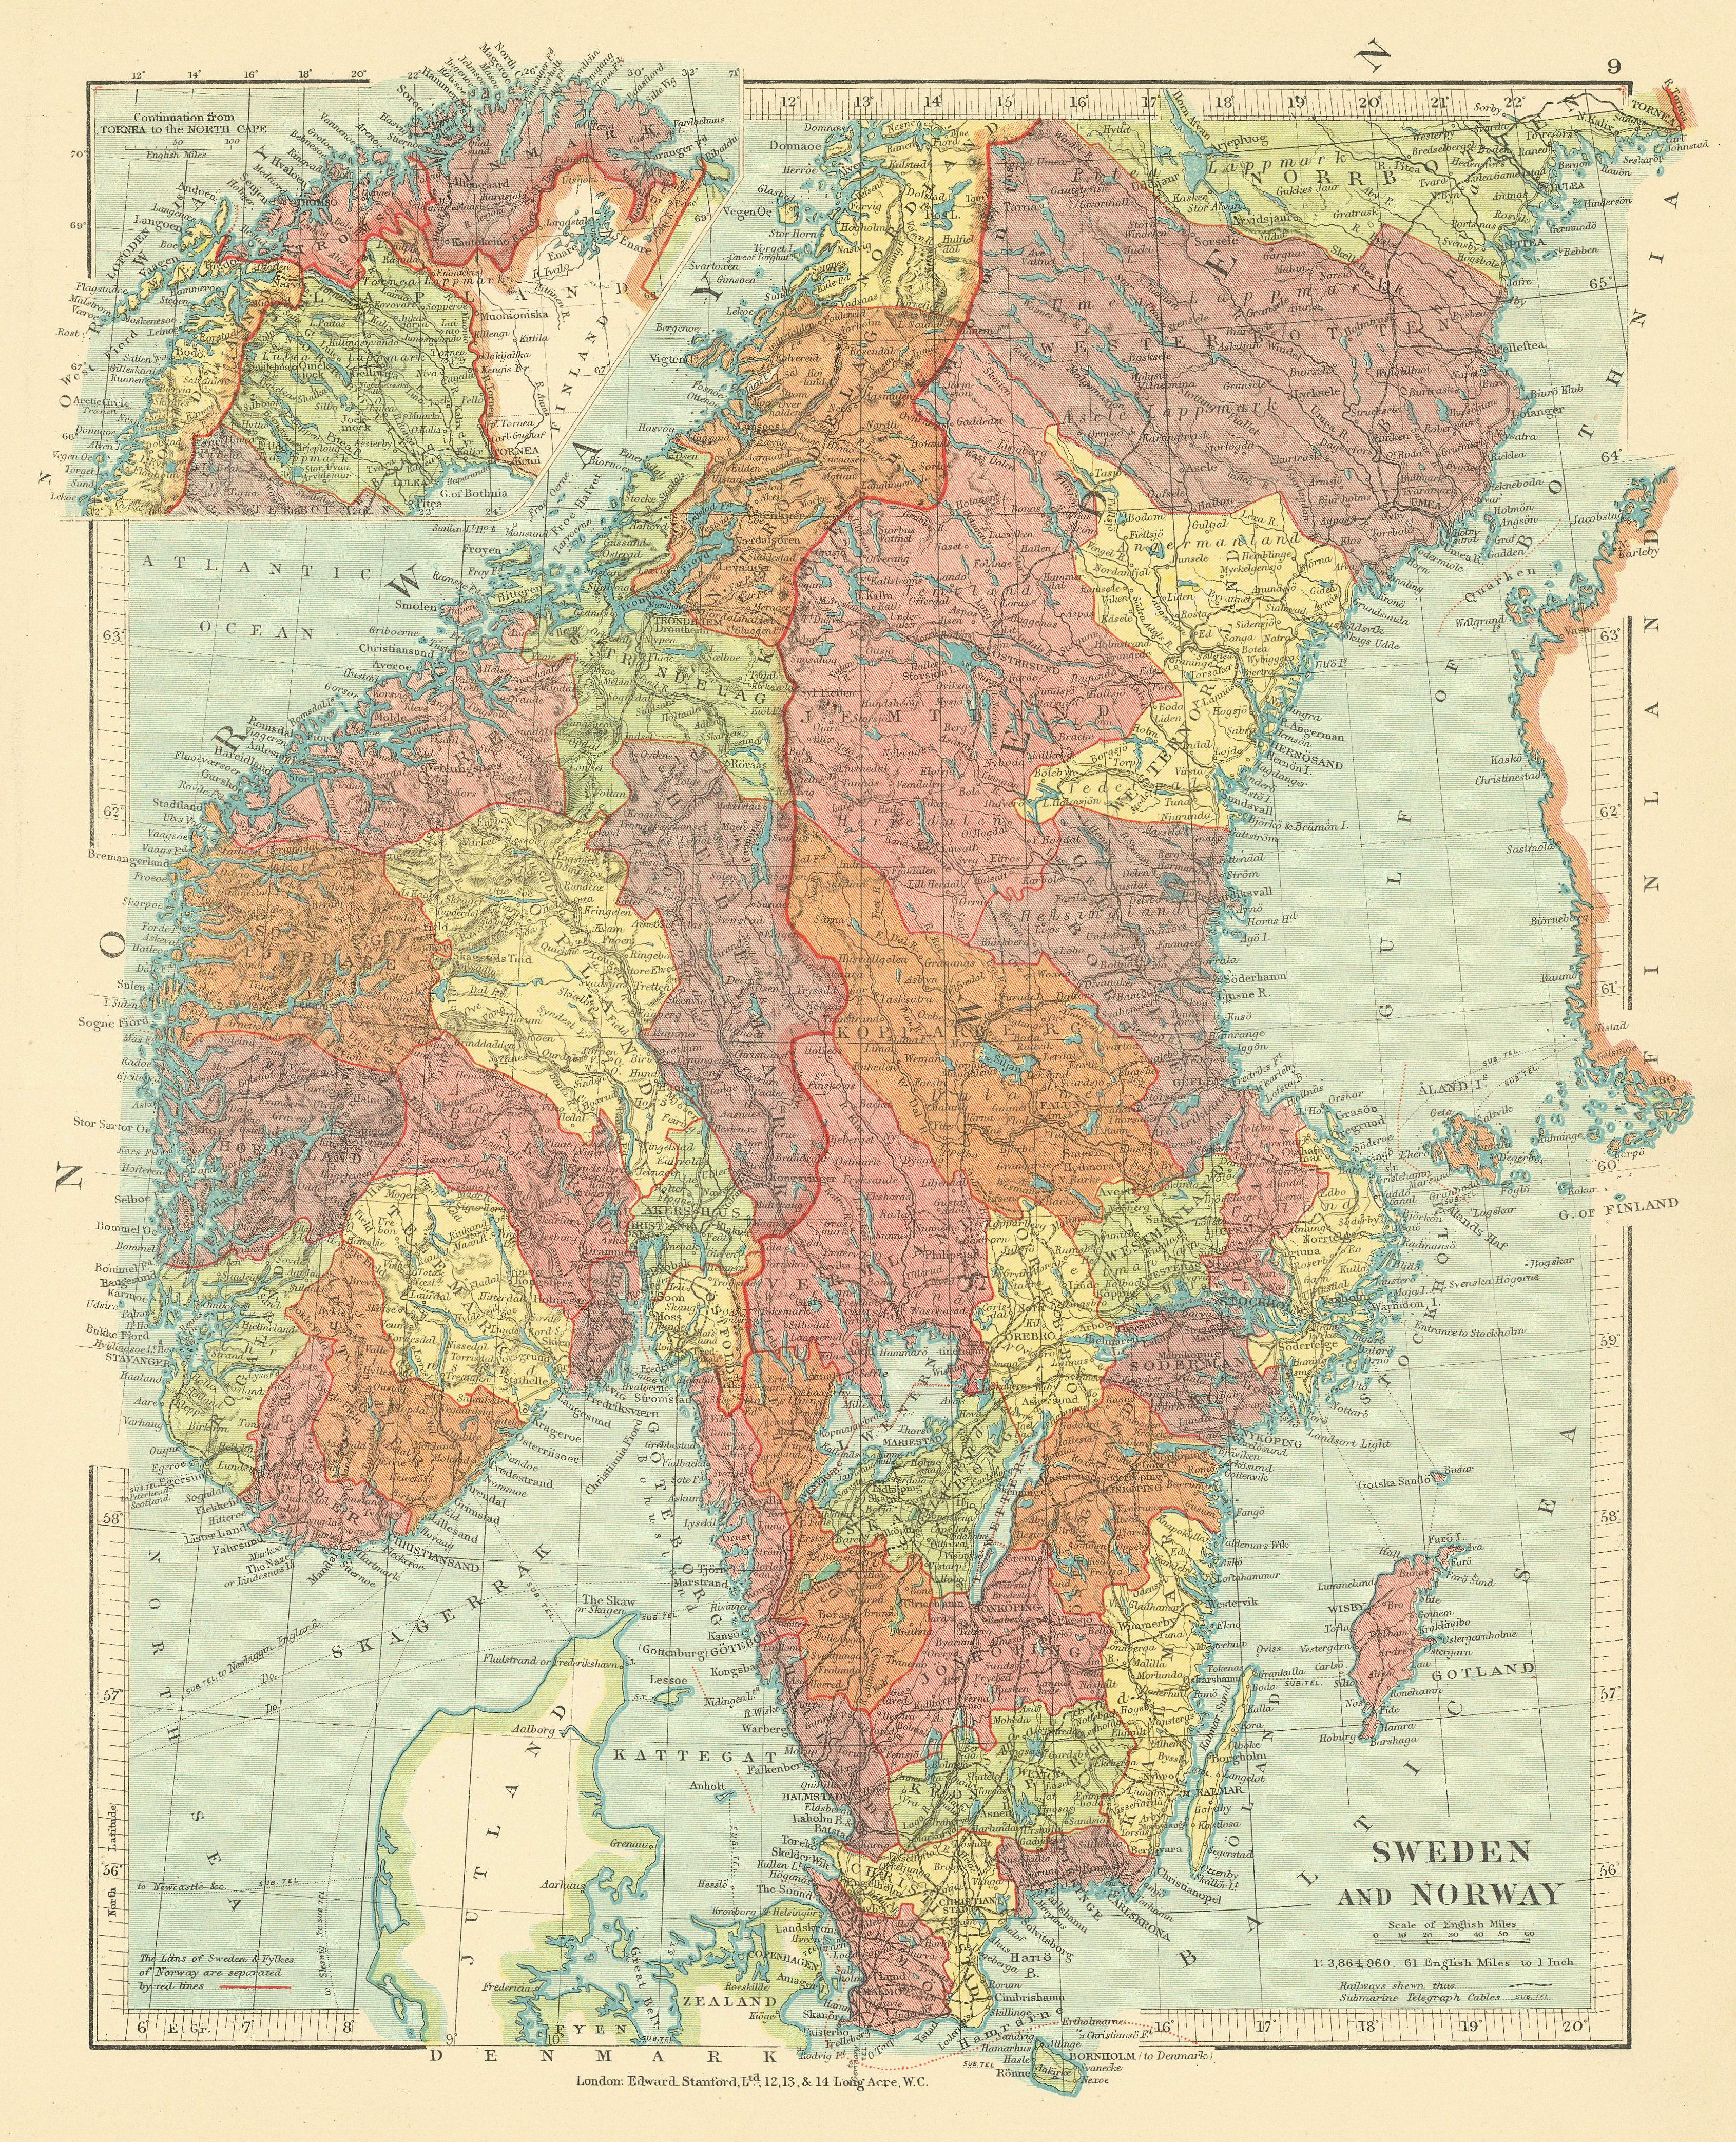 Associate Product Sweden and Norway in fylke / län / counties. Scandinavia. STANFORD c1925 map